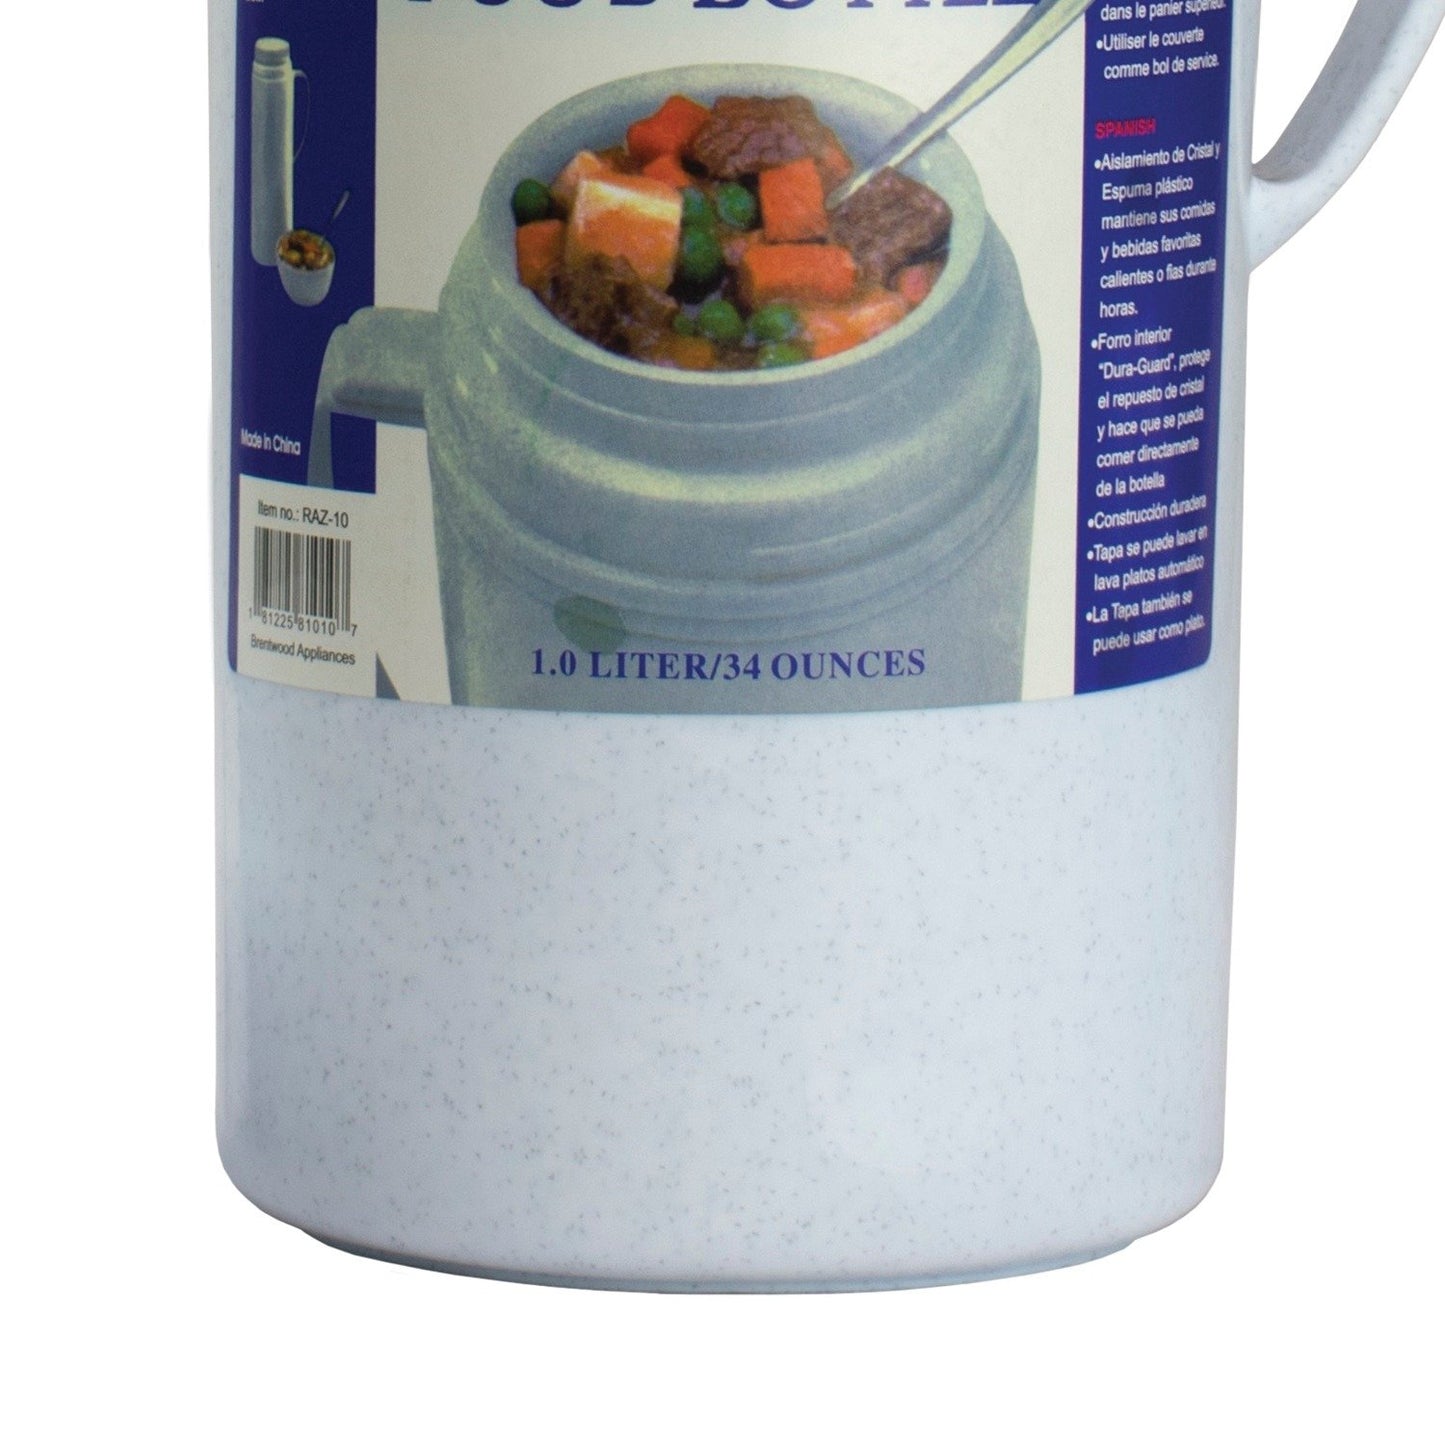 Brentwood Appl. RAZ12 Vacuum Insulated Food Jar (40oz)